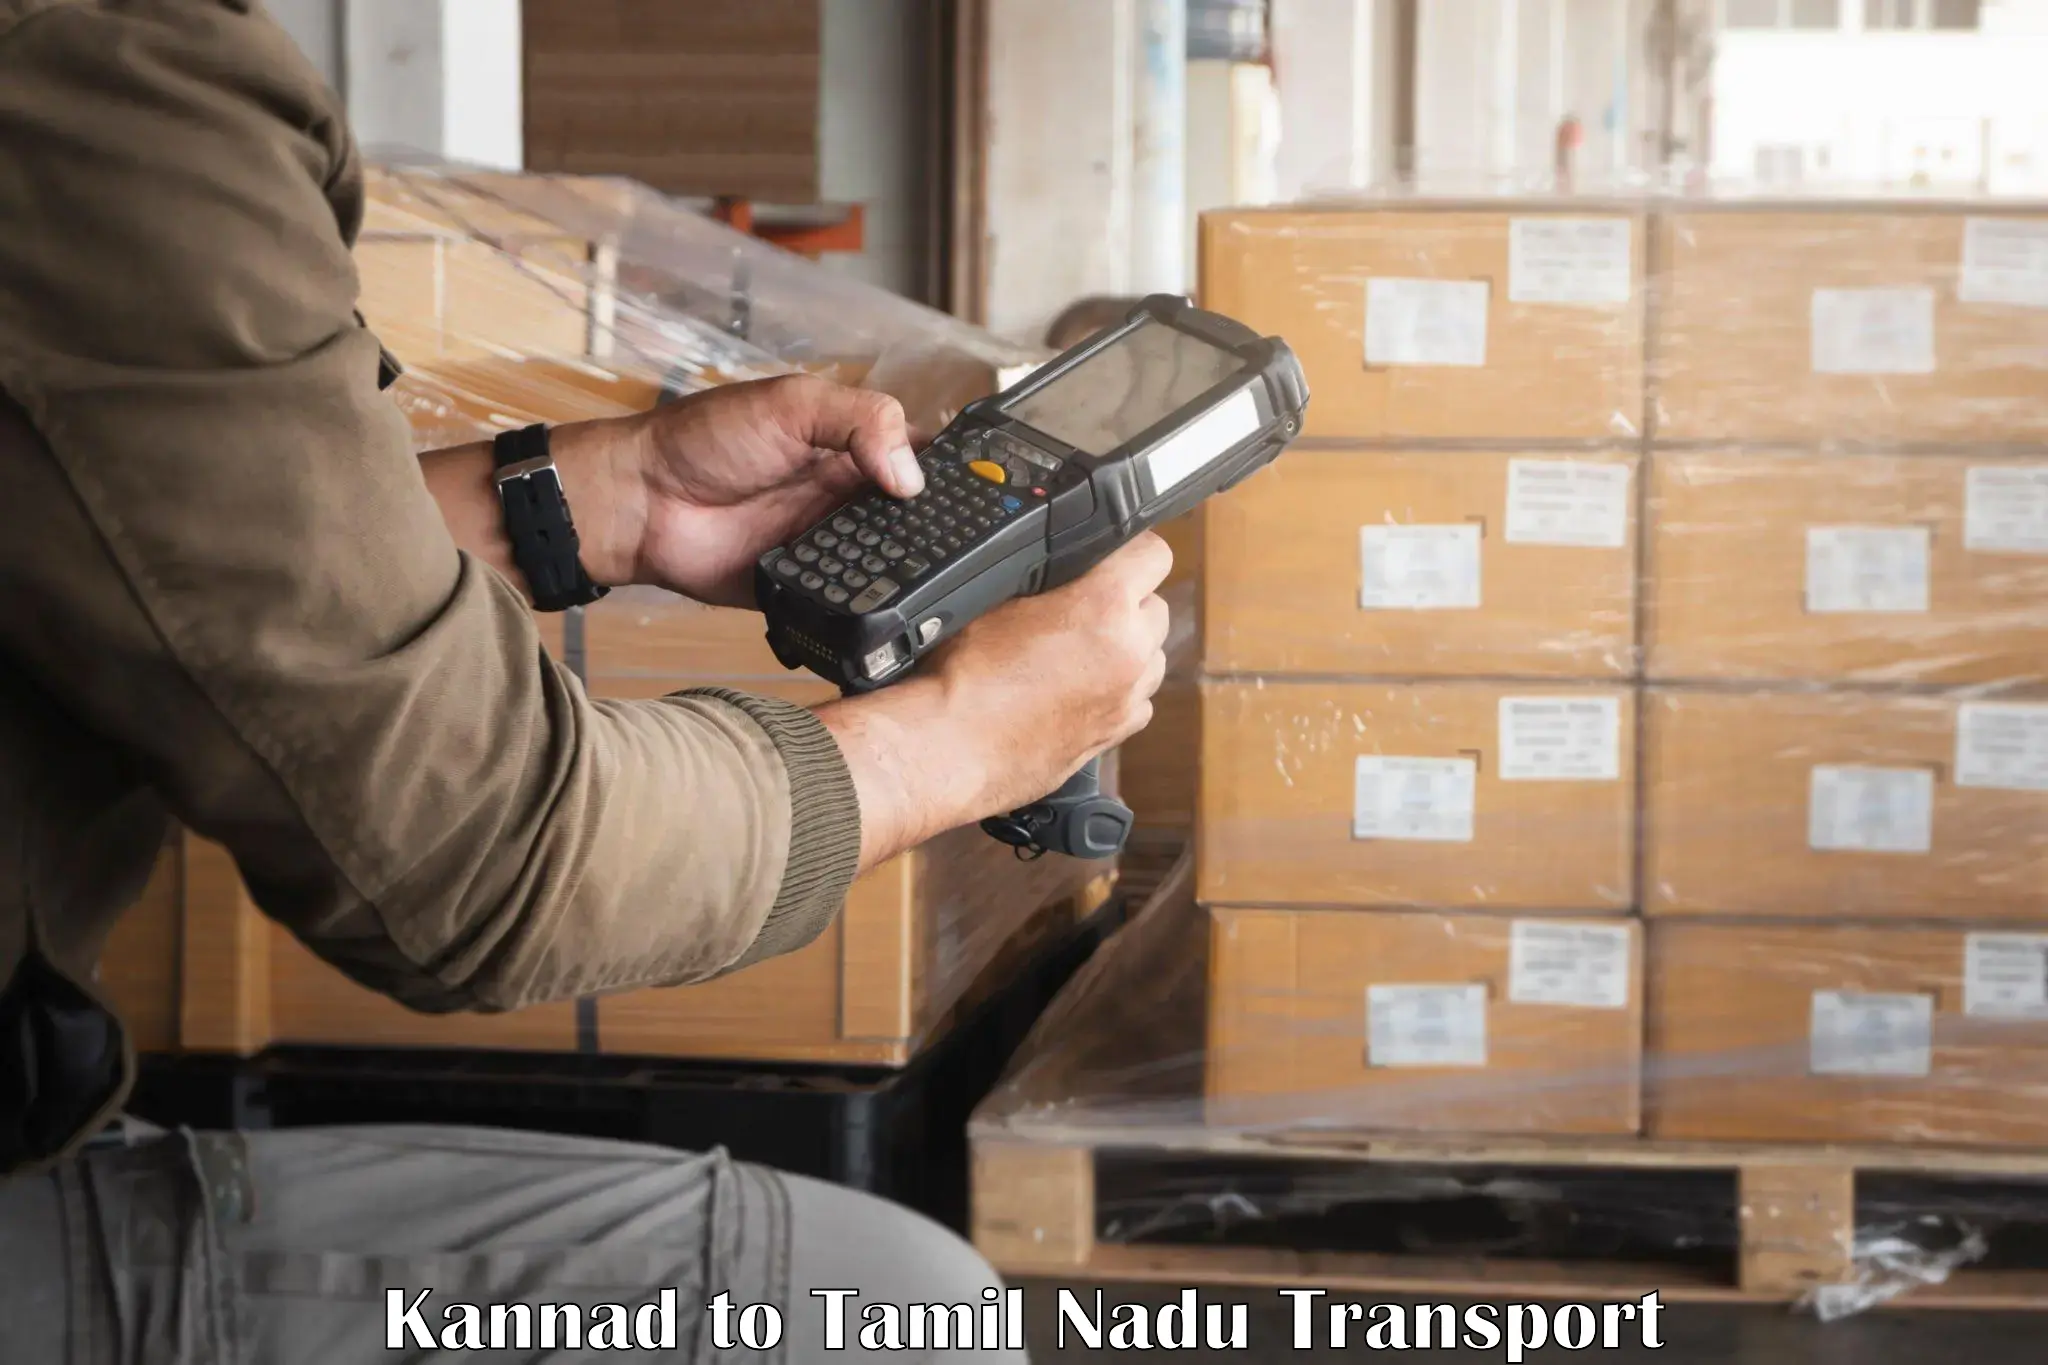 Online transport booking Kannad to The Gandhigram Rural Institute